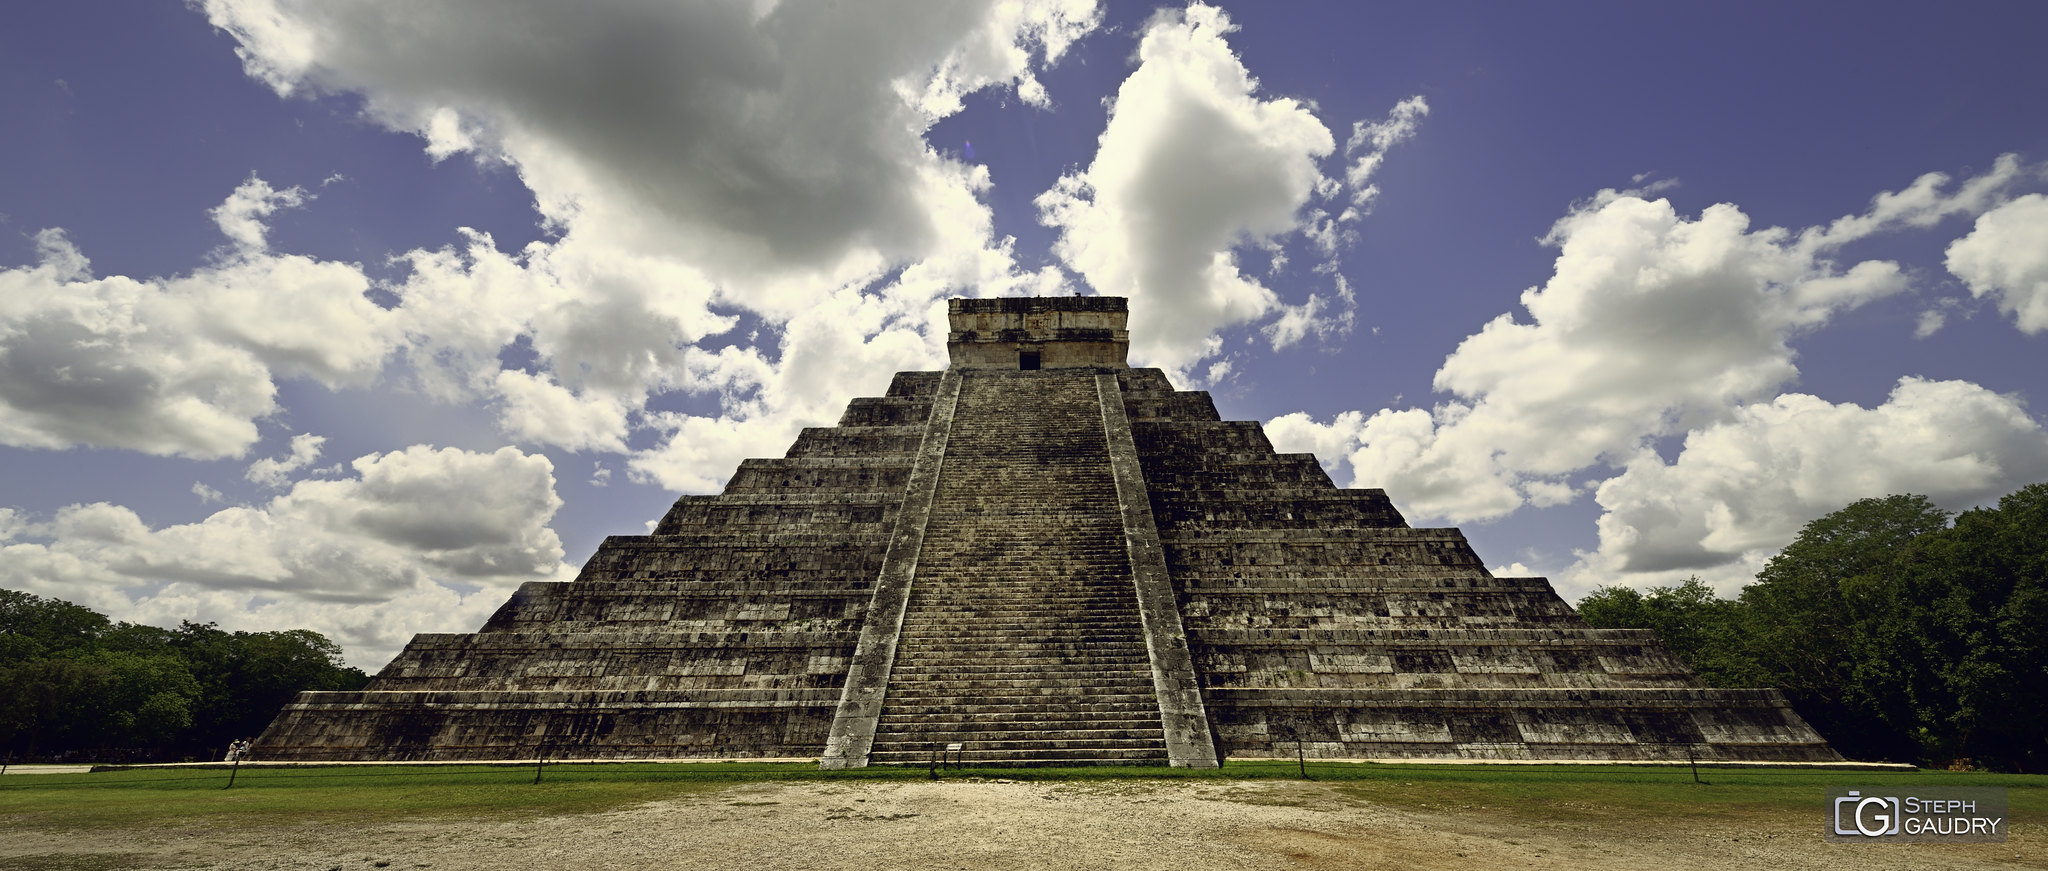 Chichen Itza - El Castillo (pyramide de Kukulcán) [Click to start slideshow]